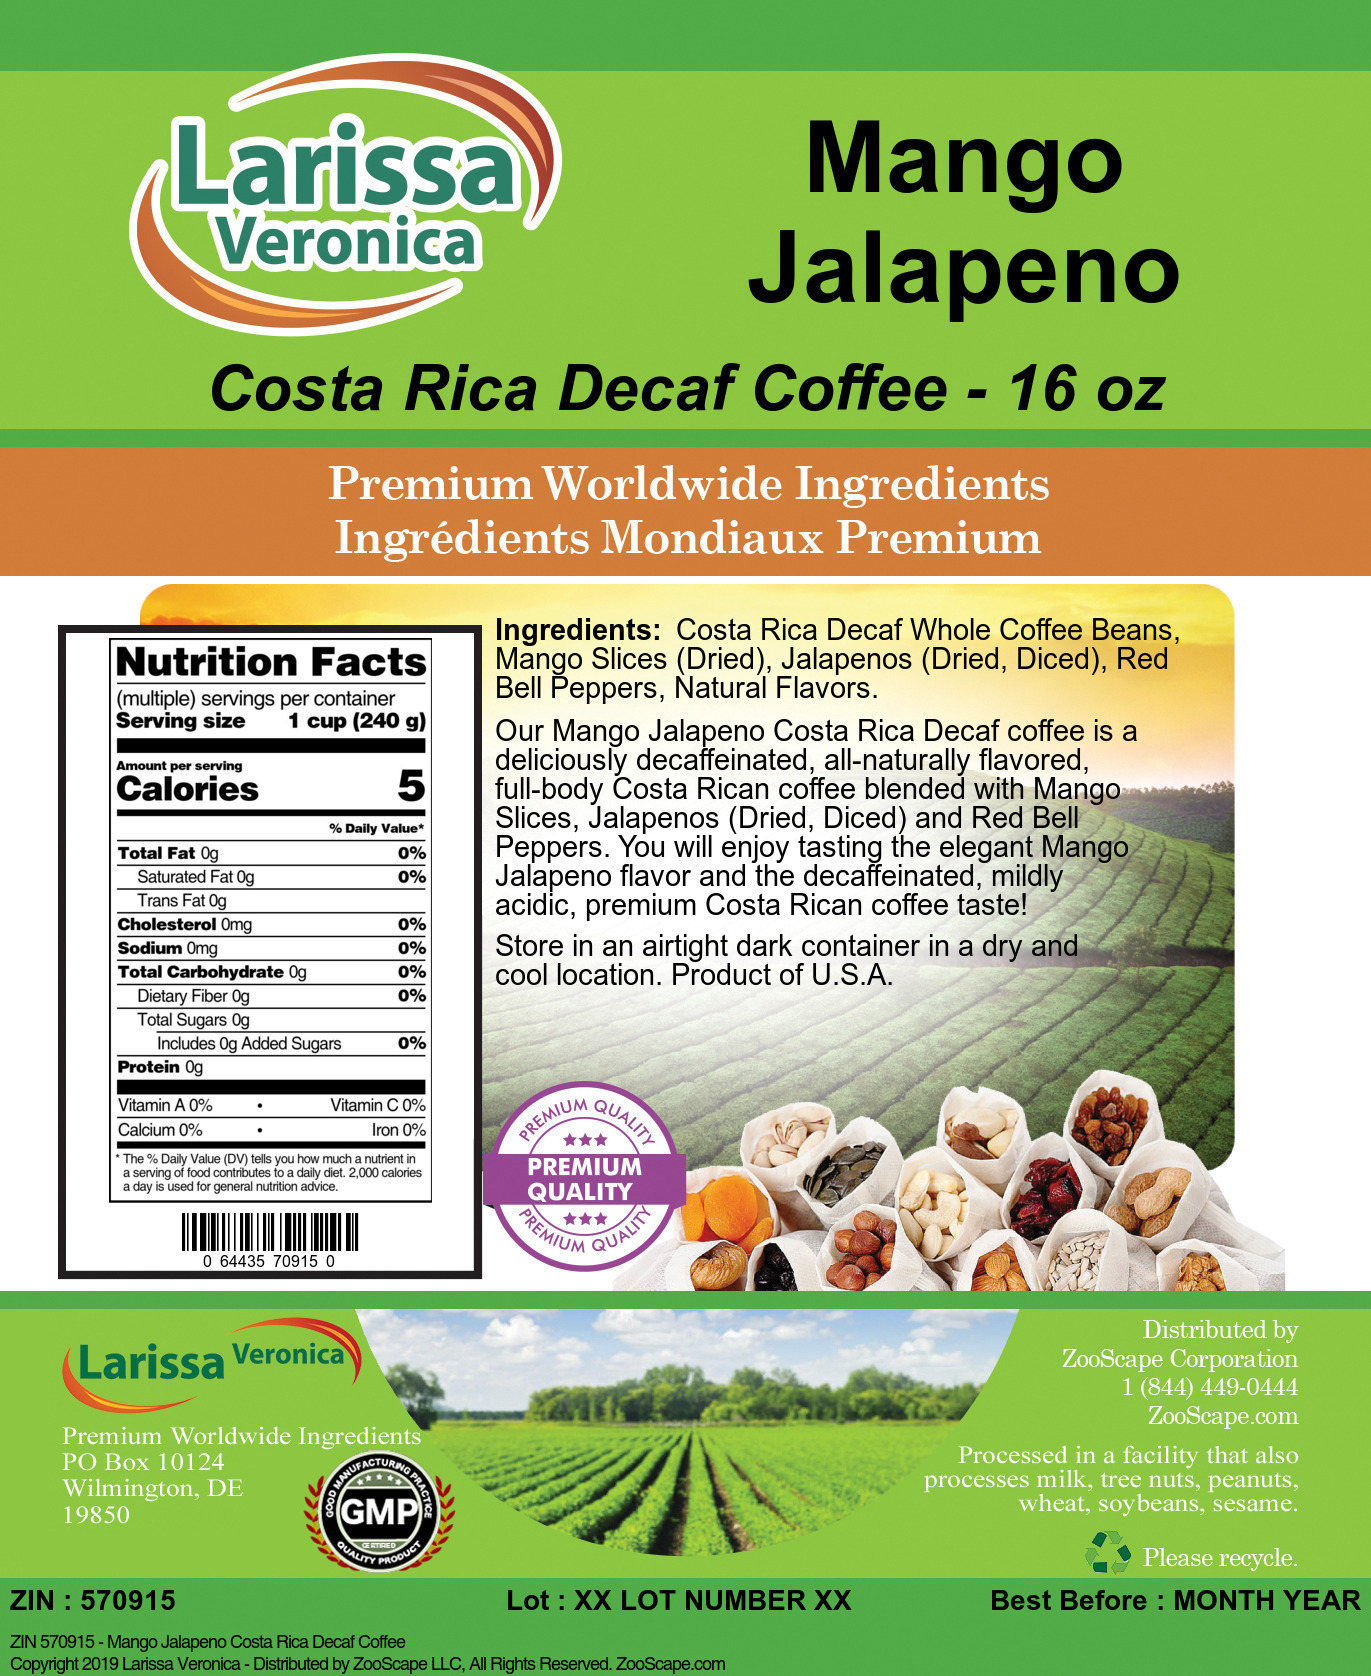 Mango Jalapeno Costa Rica Decaf Coffee - Label